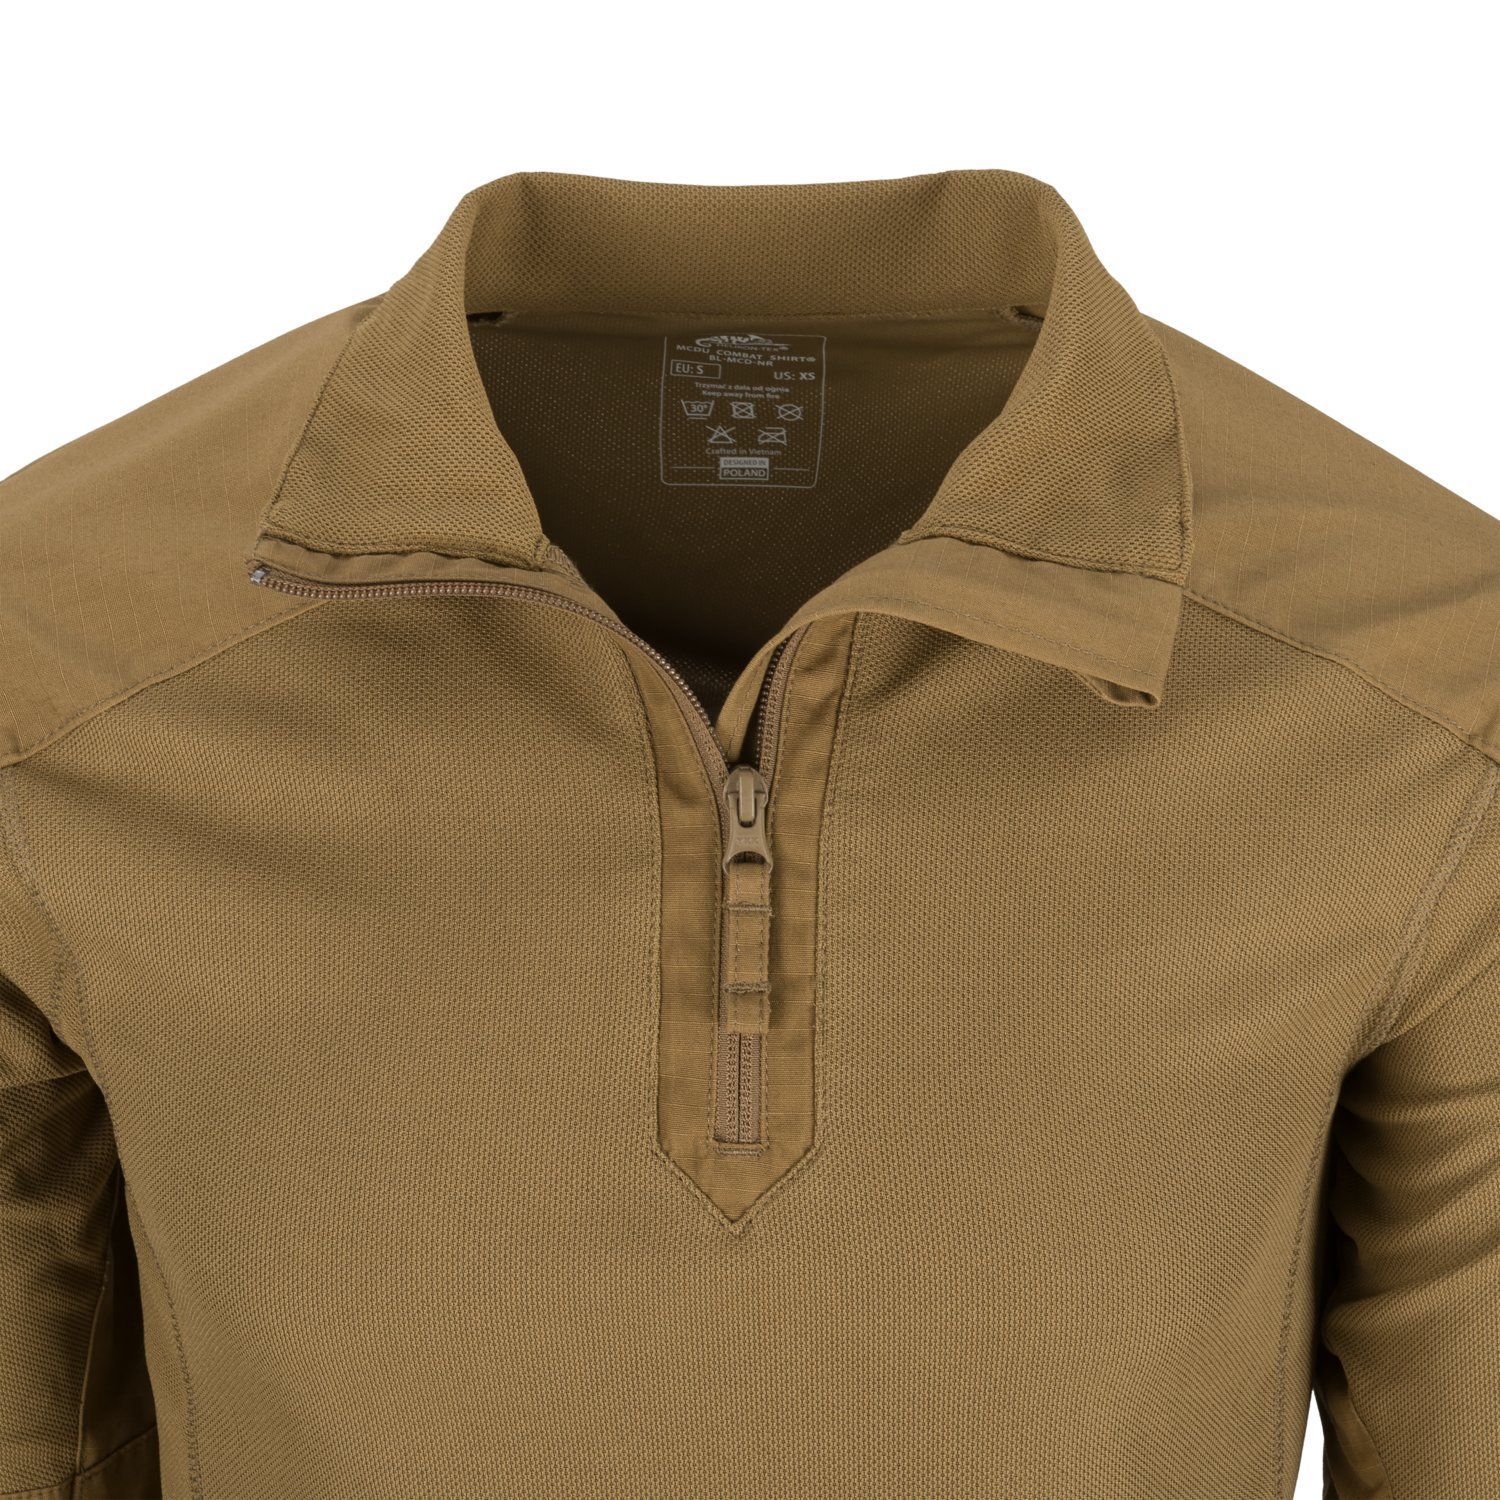 MCDU Combat Shirt® - NyCo Ripstop - Flecktarn - Helikon